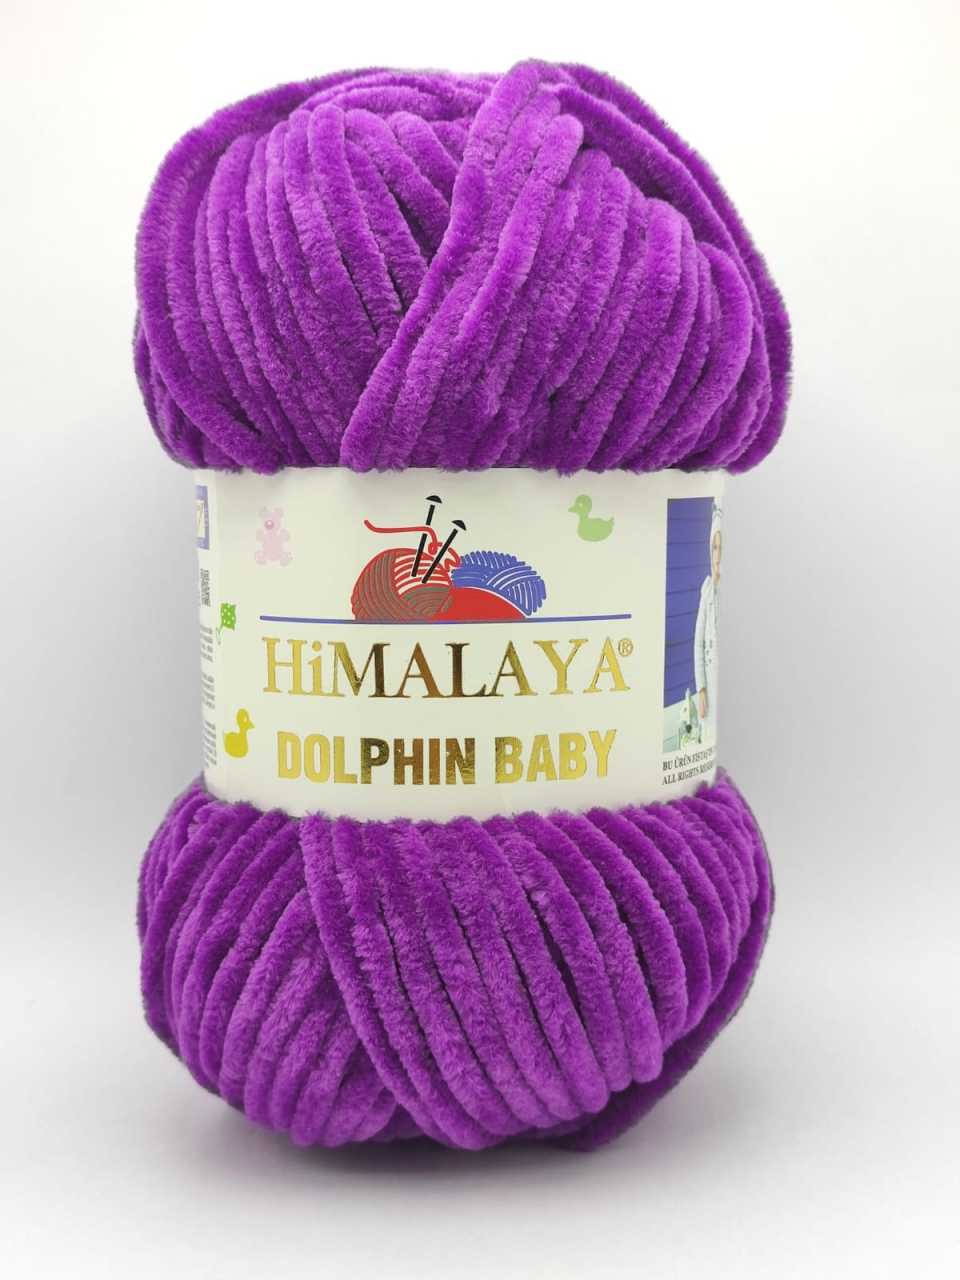 Himalaya Dolphin Baby 80358